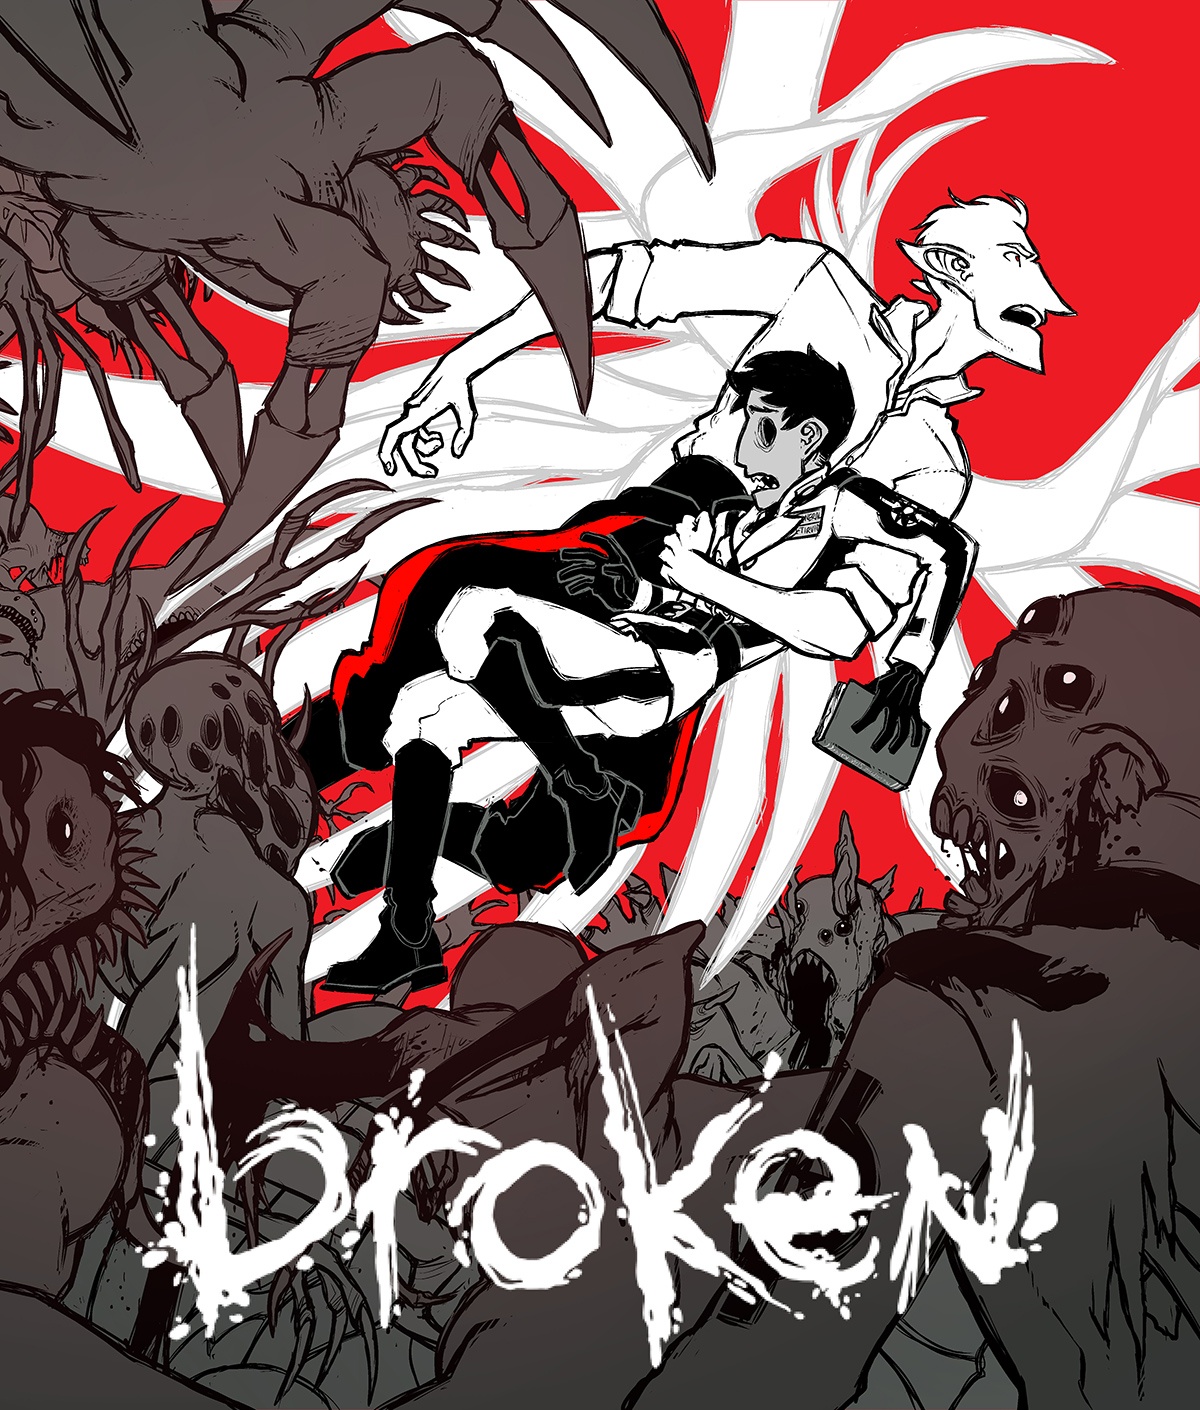 PROMO – Broken